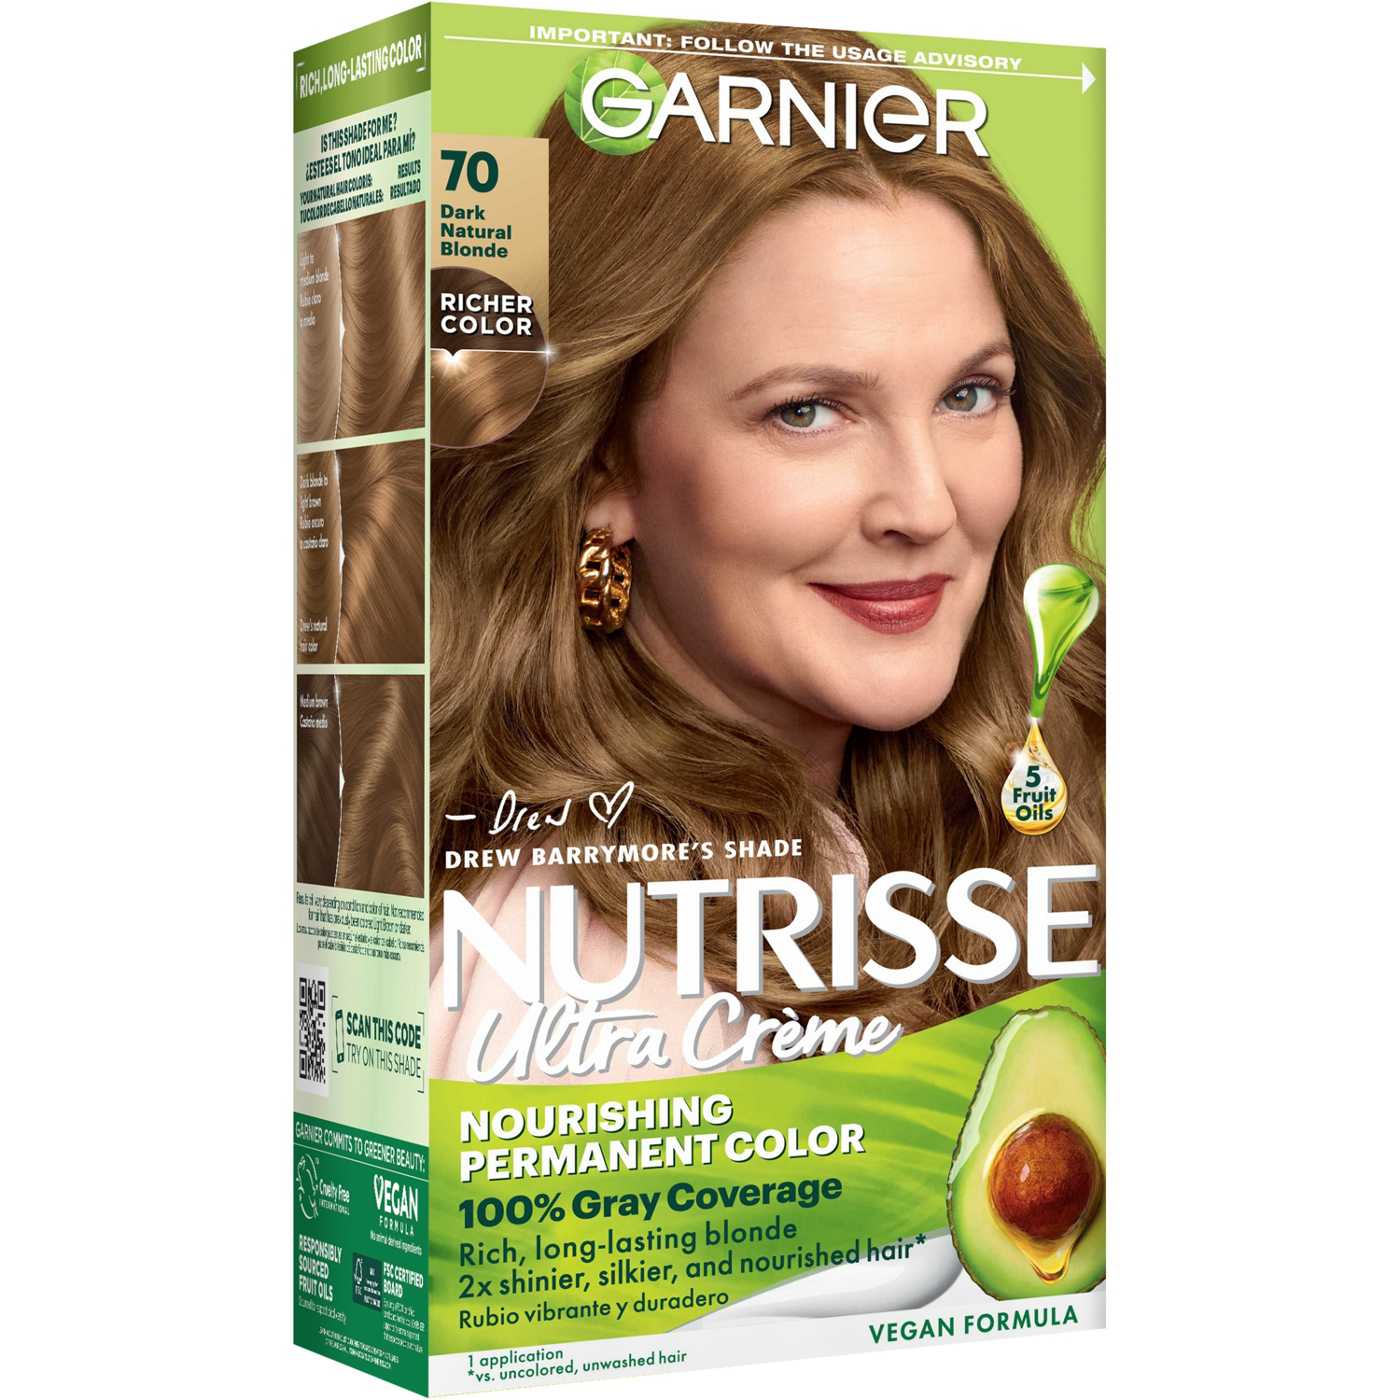 Garnier Nutrisse Nourishing Hair Color Creme - 70 Dark Natural Blonde; image 5 of 9